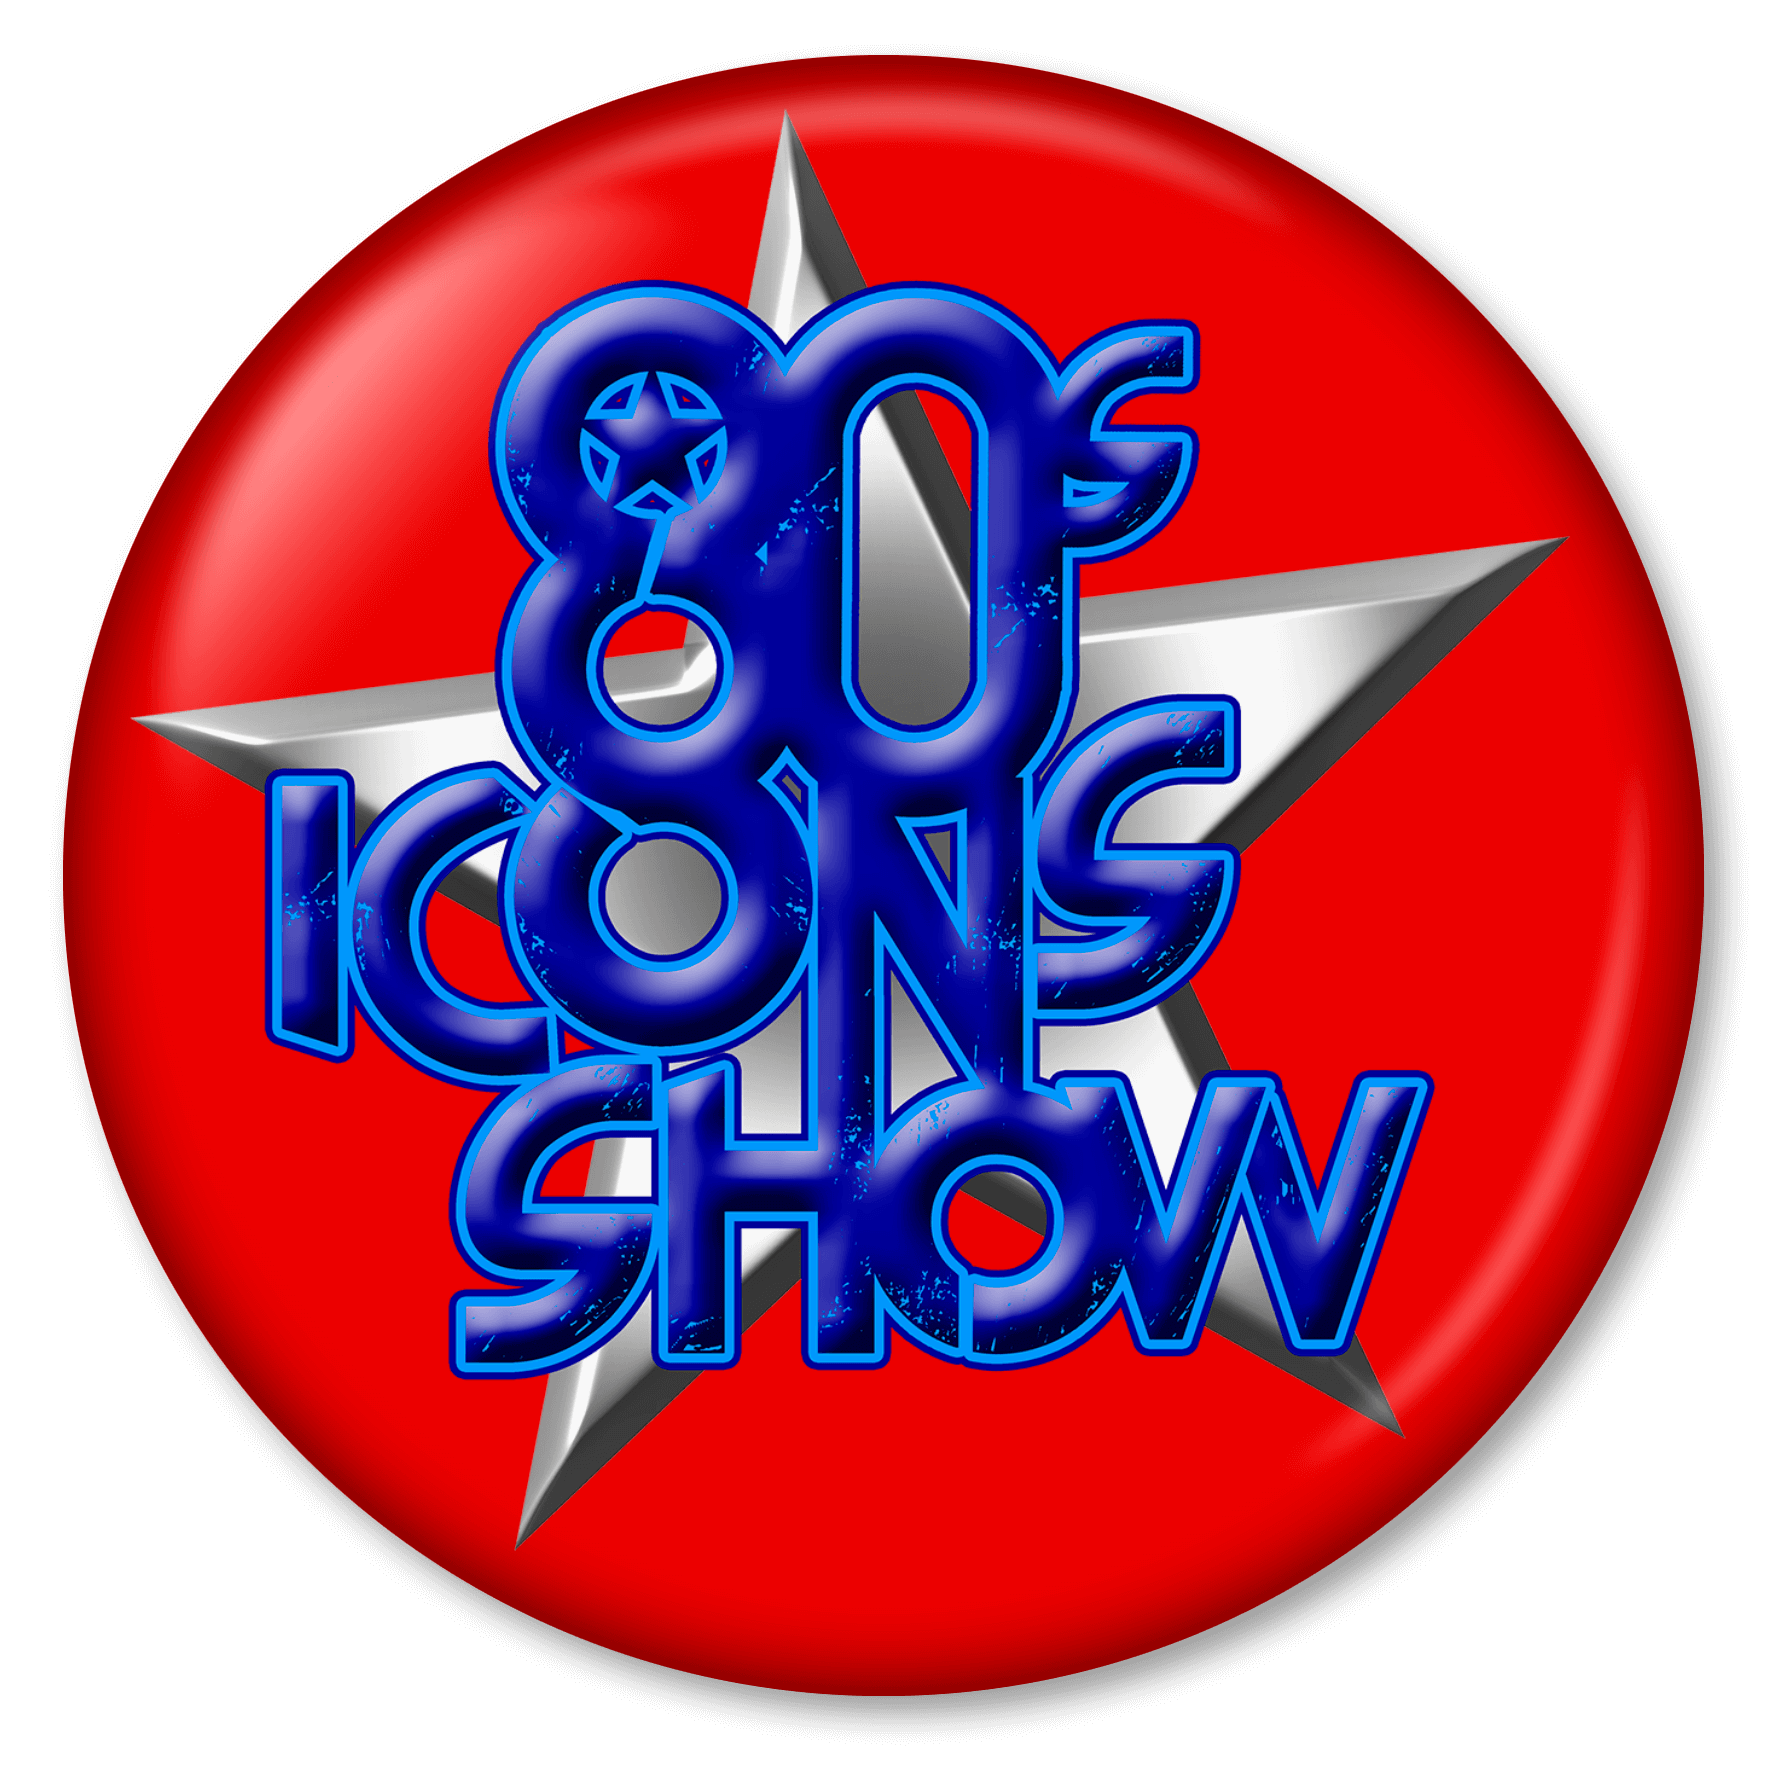 80s icons badge